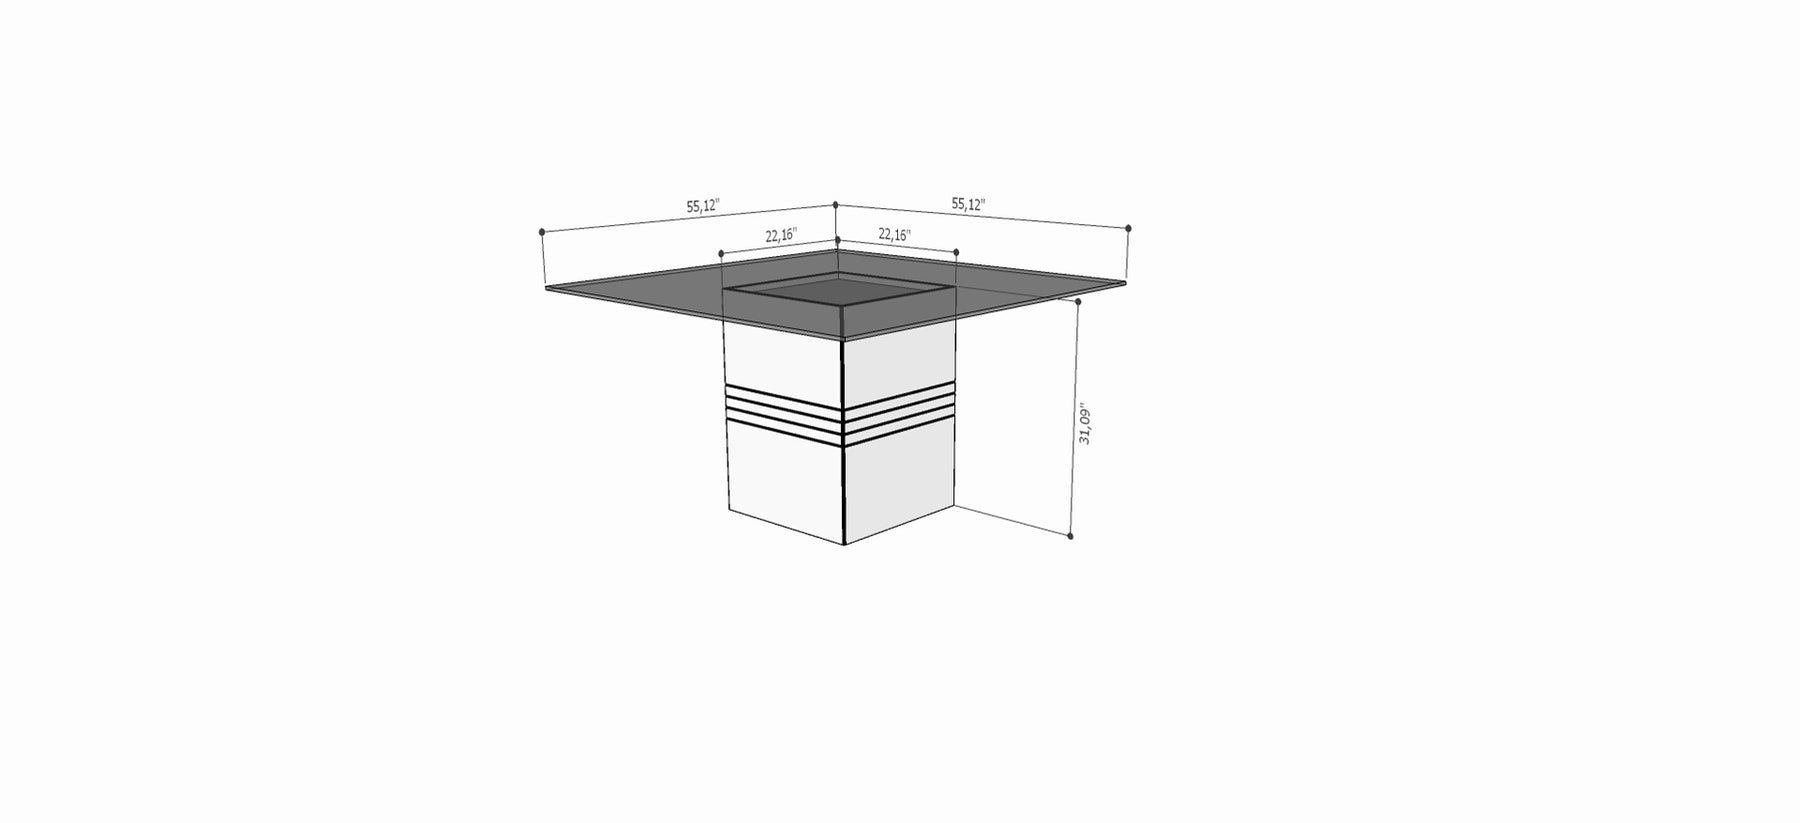 Manhattan Comfort Perry 1.8 - 55.12 in Sleek Tempered Glass Table Top in Nut Brown-Minimal & Modern